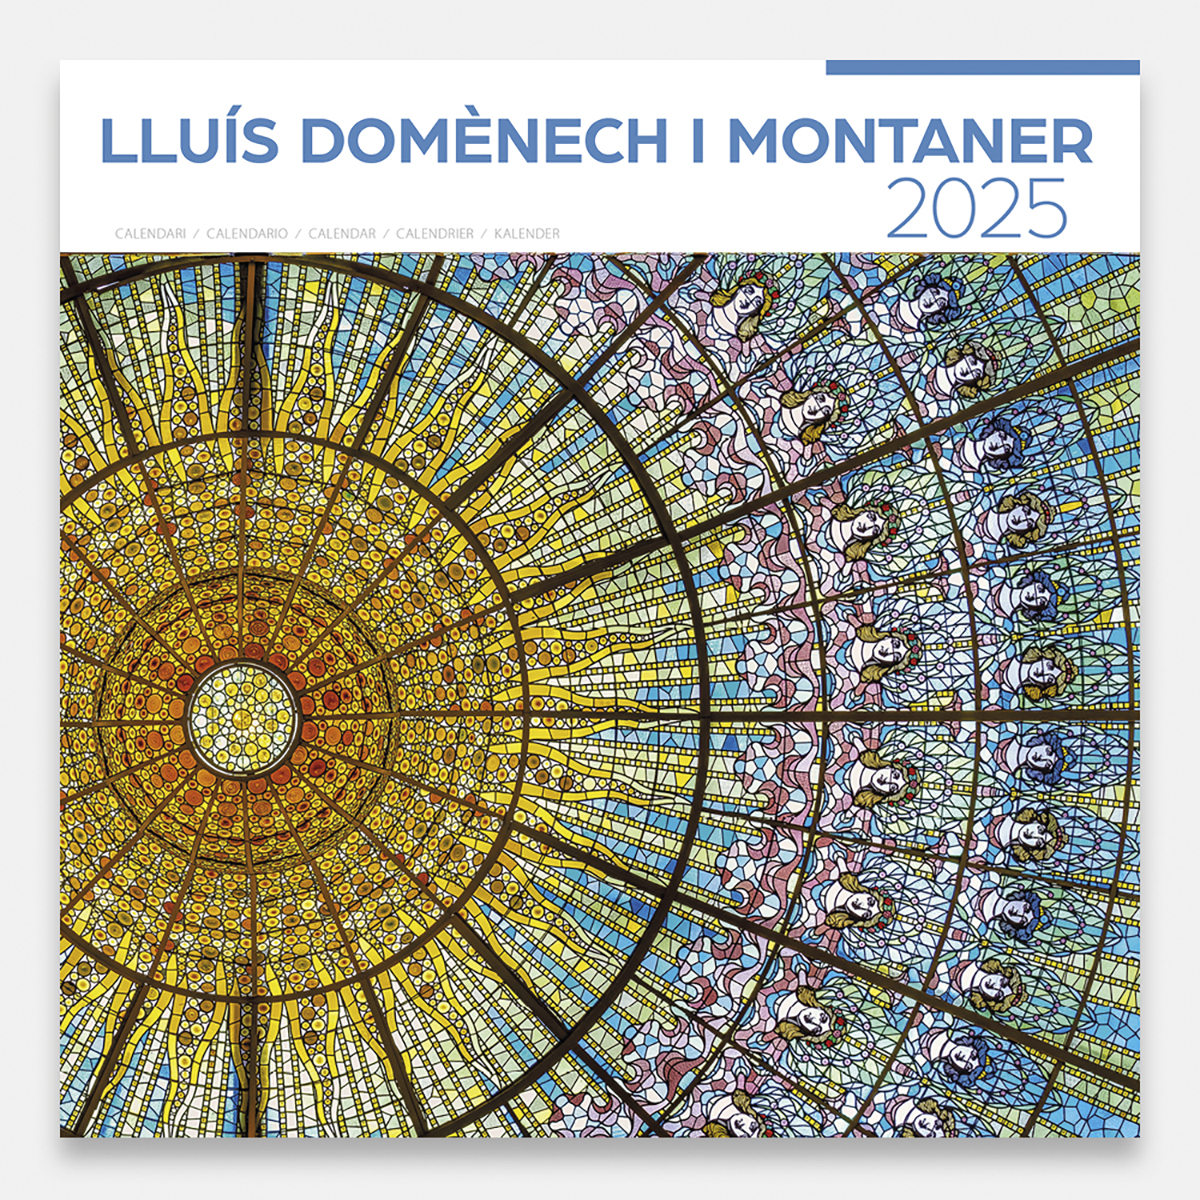 Calendari 2025 Lluís Domènech i Montaner (A) 25dmg1a calendario pared 2025 lluis domenech